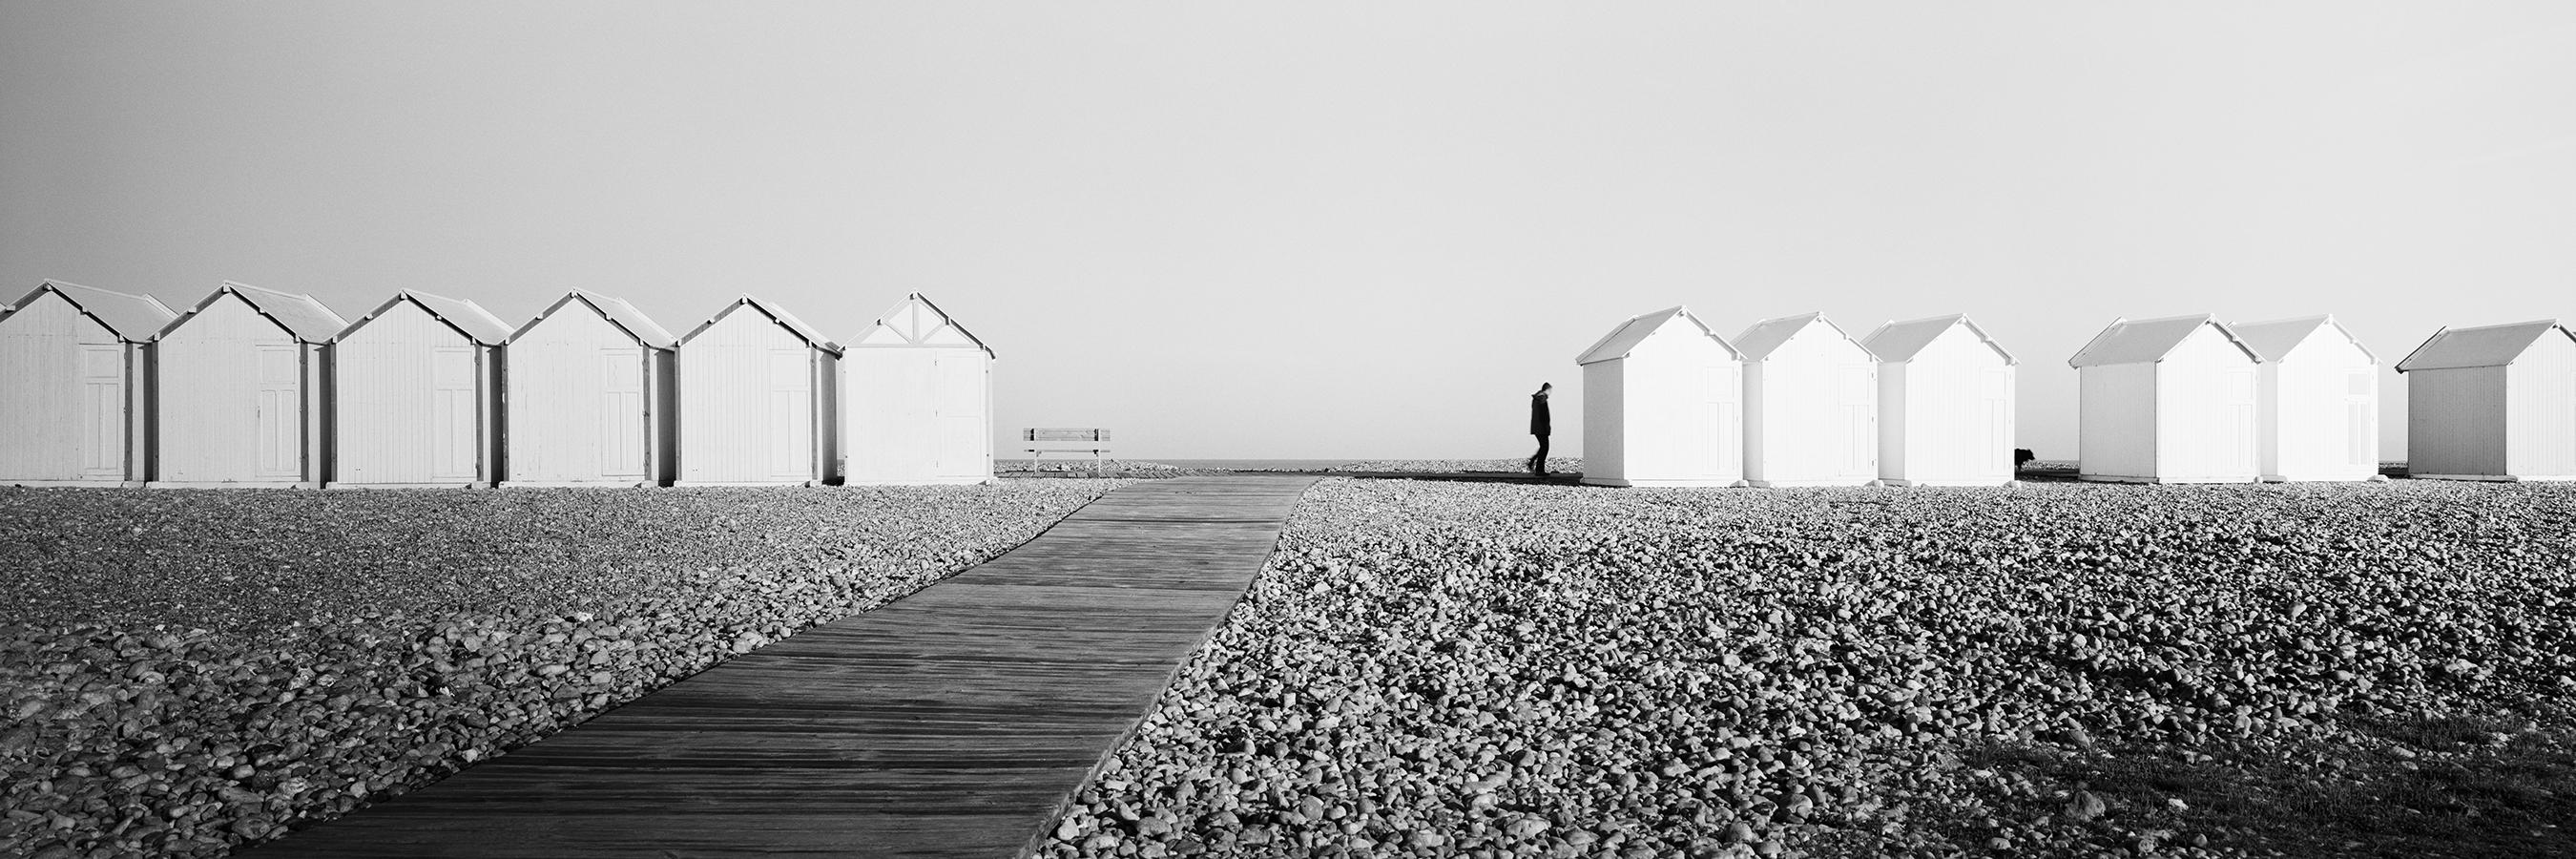 Beach Huts Panorama, Felsen Strand, Schwarz-Weiß-Fotografiedruck